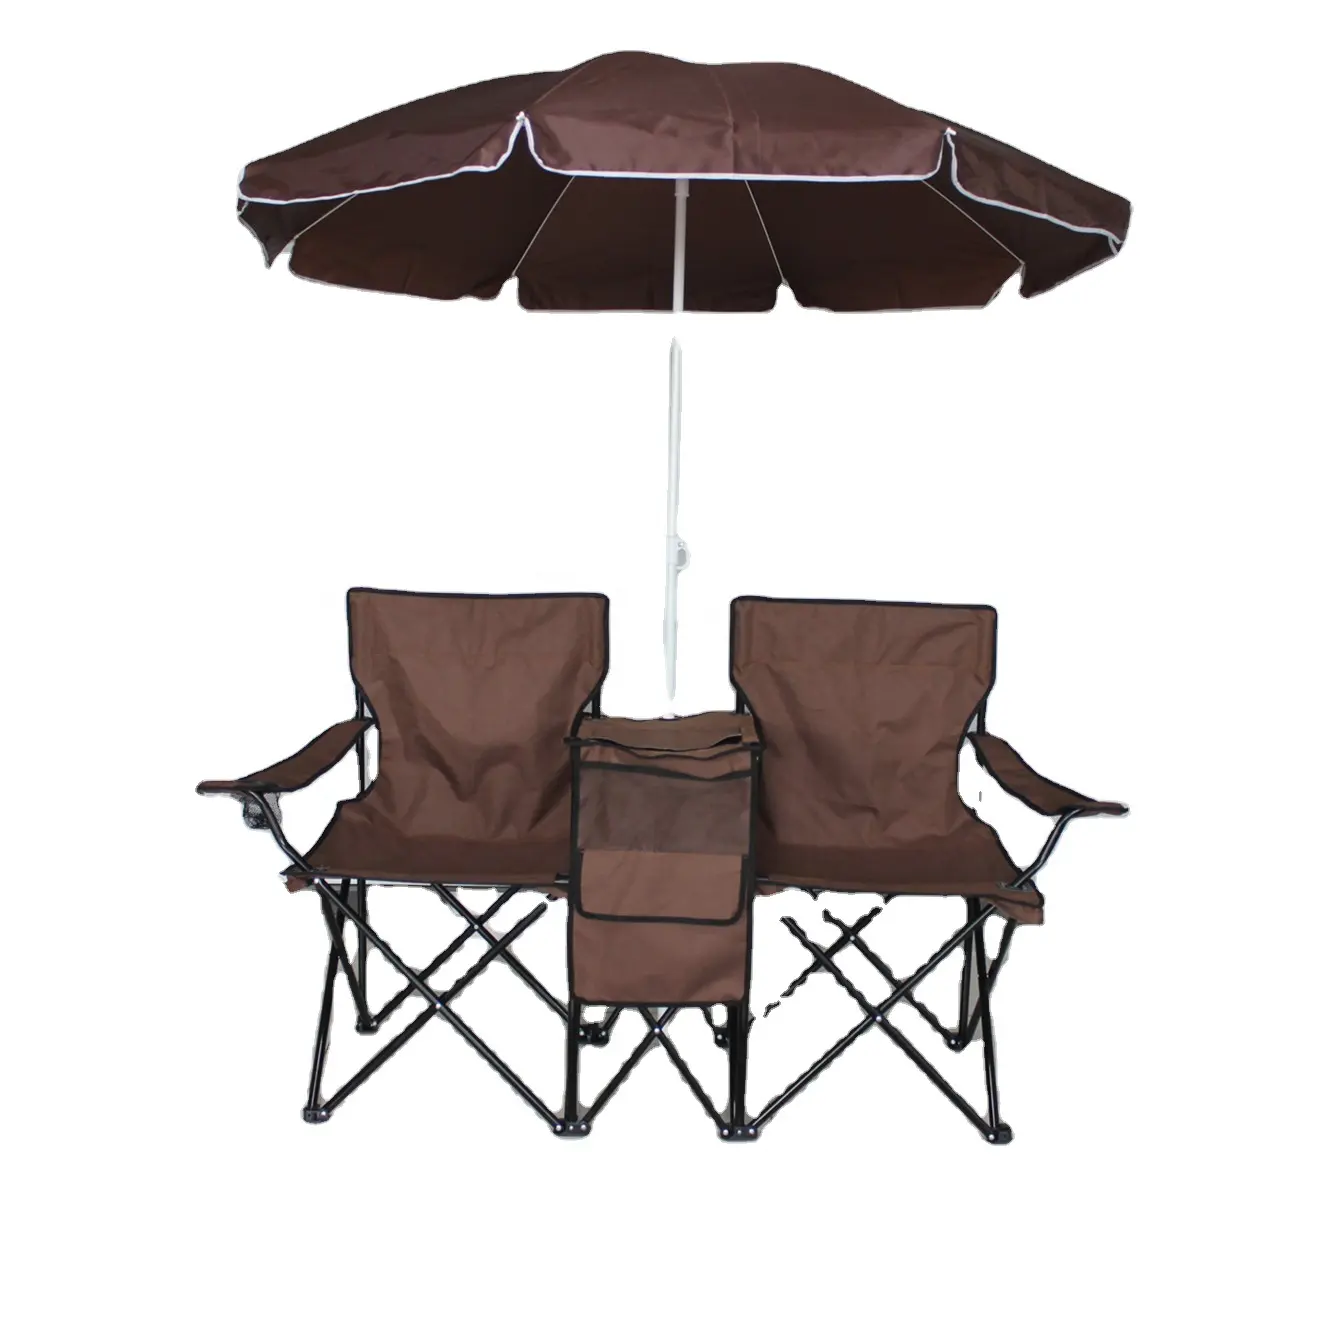 Sillas de playa para dos personas, Picnic al aire libre, silla doble para acampar, sillón plegable portátil para amantes con paraguas